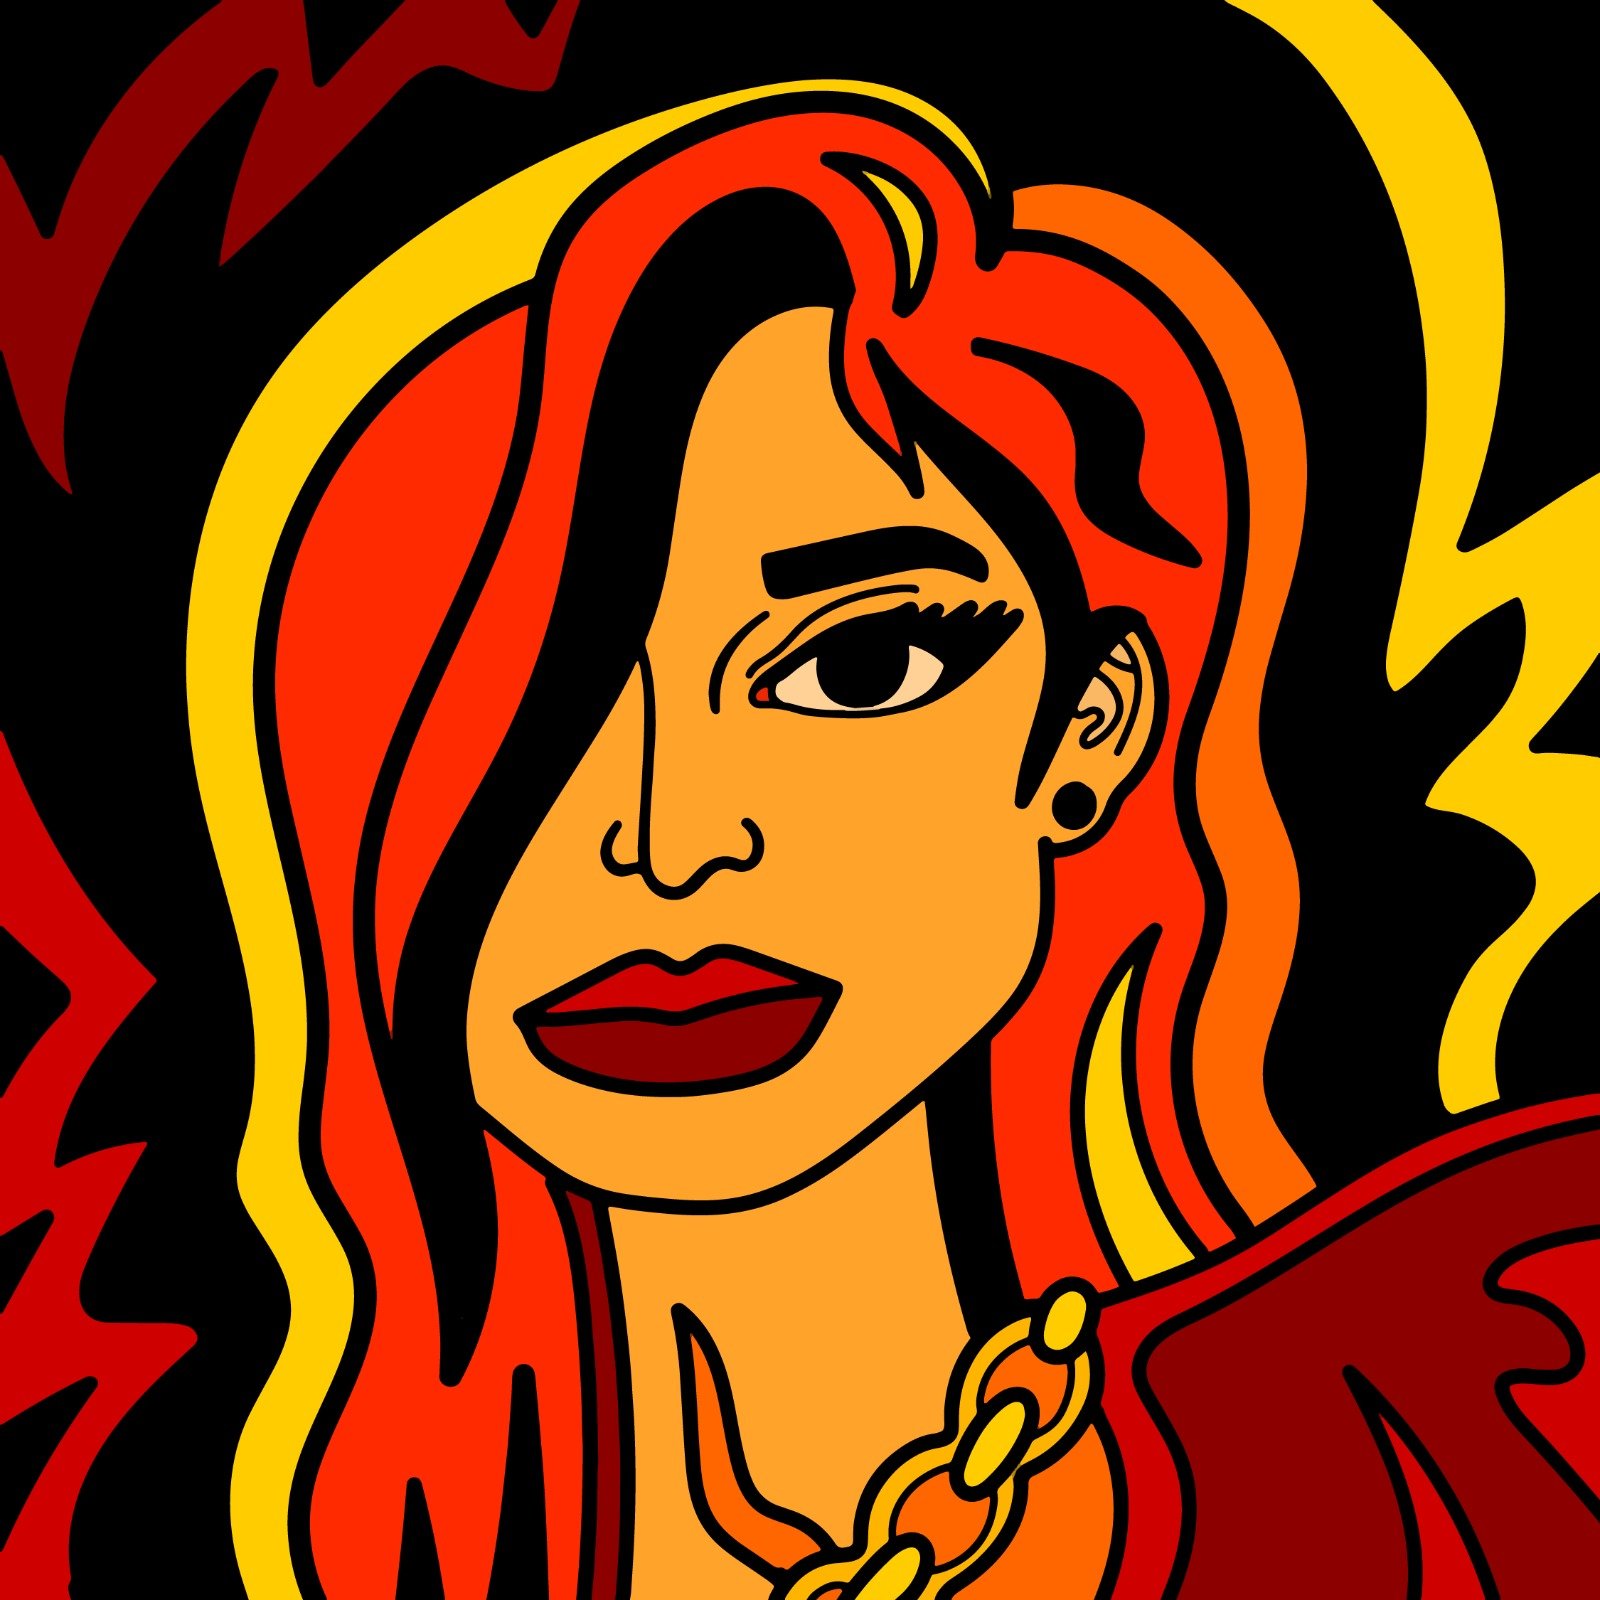 Mina Tocalini provides illustration for Kylie Jenner story in 360 MAGAZINE.